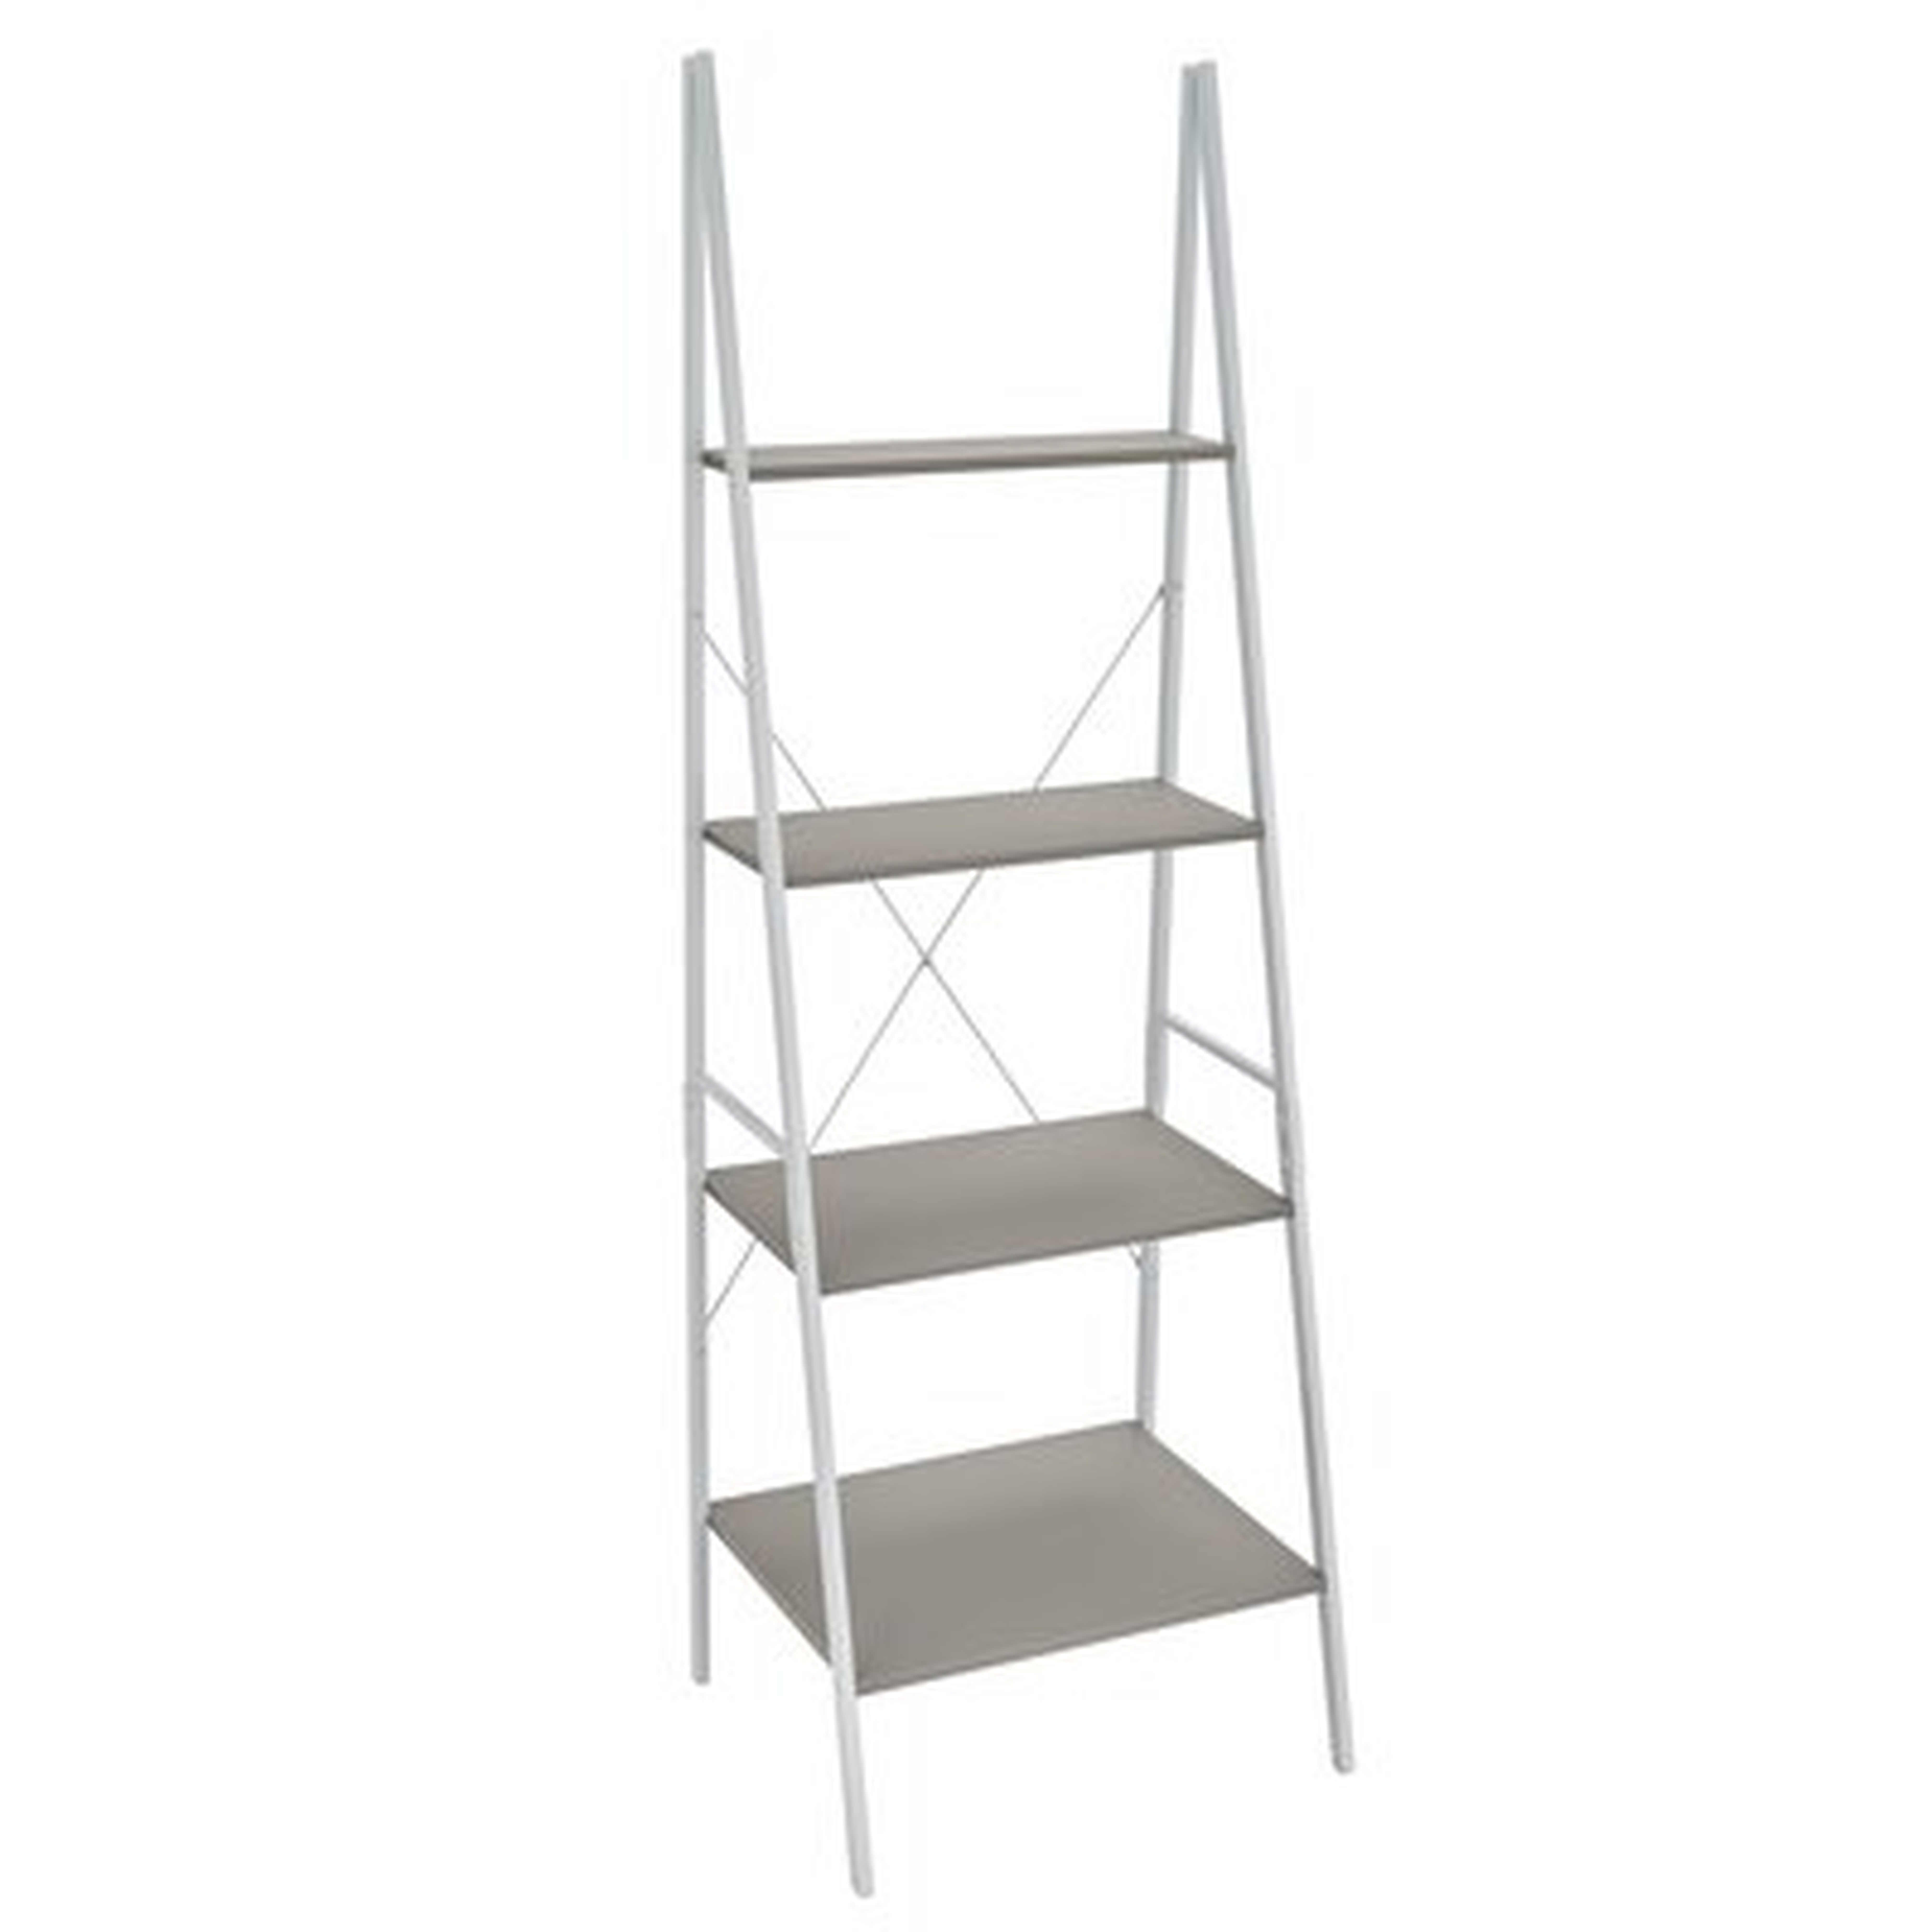 Almanzar Ladder Bookcase - Wayfair